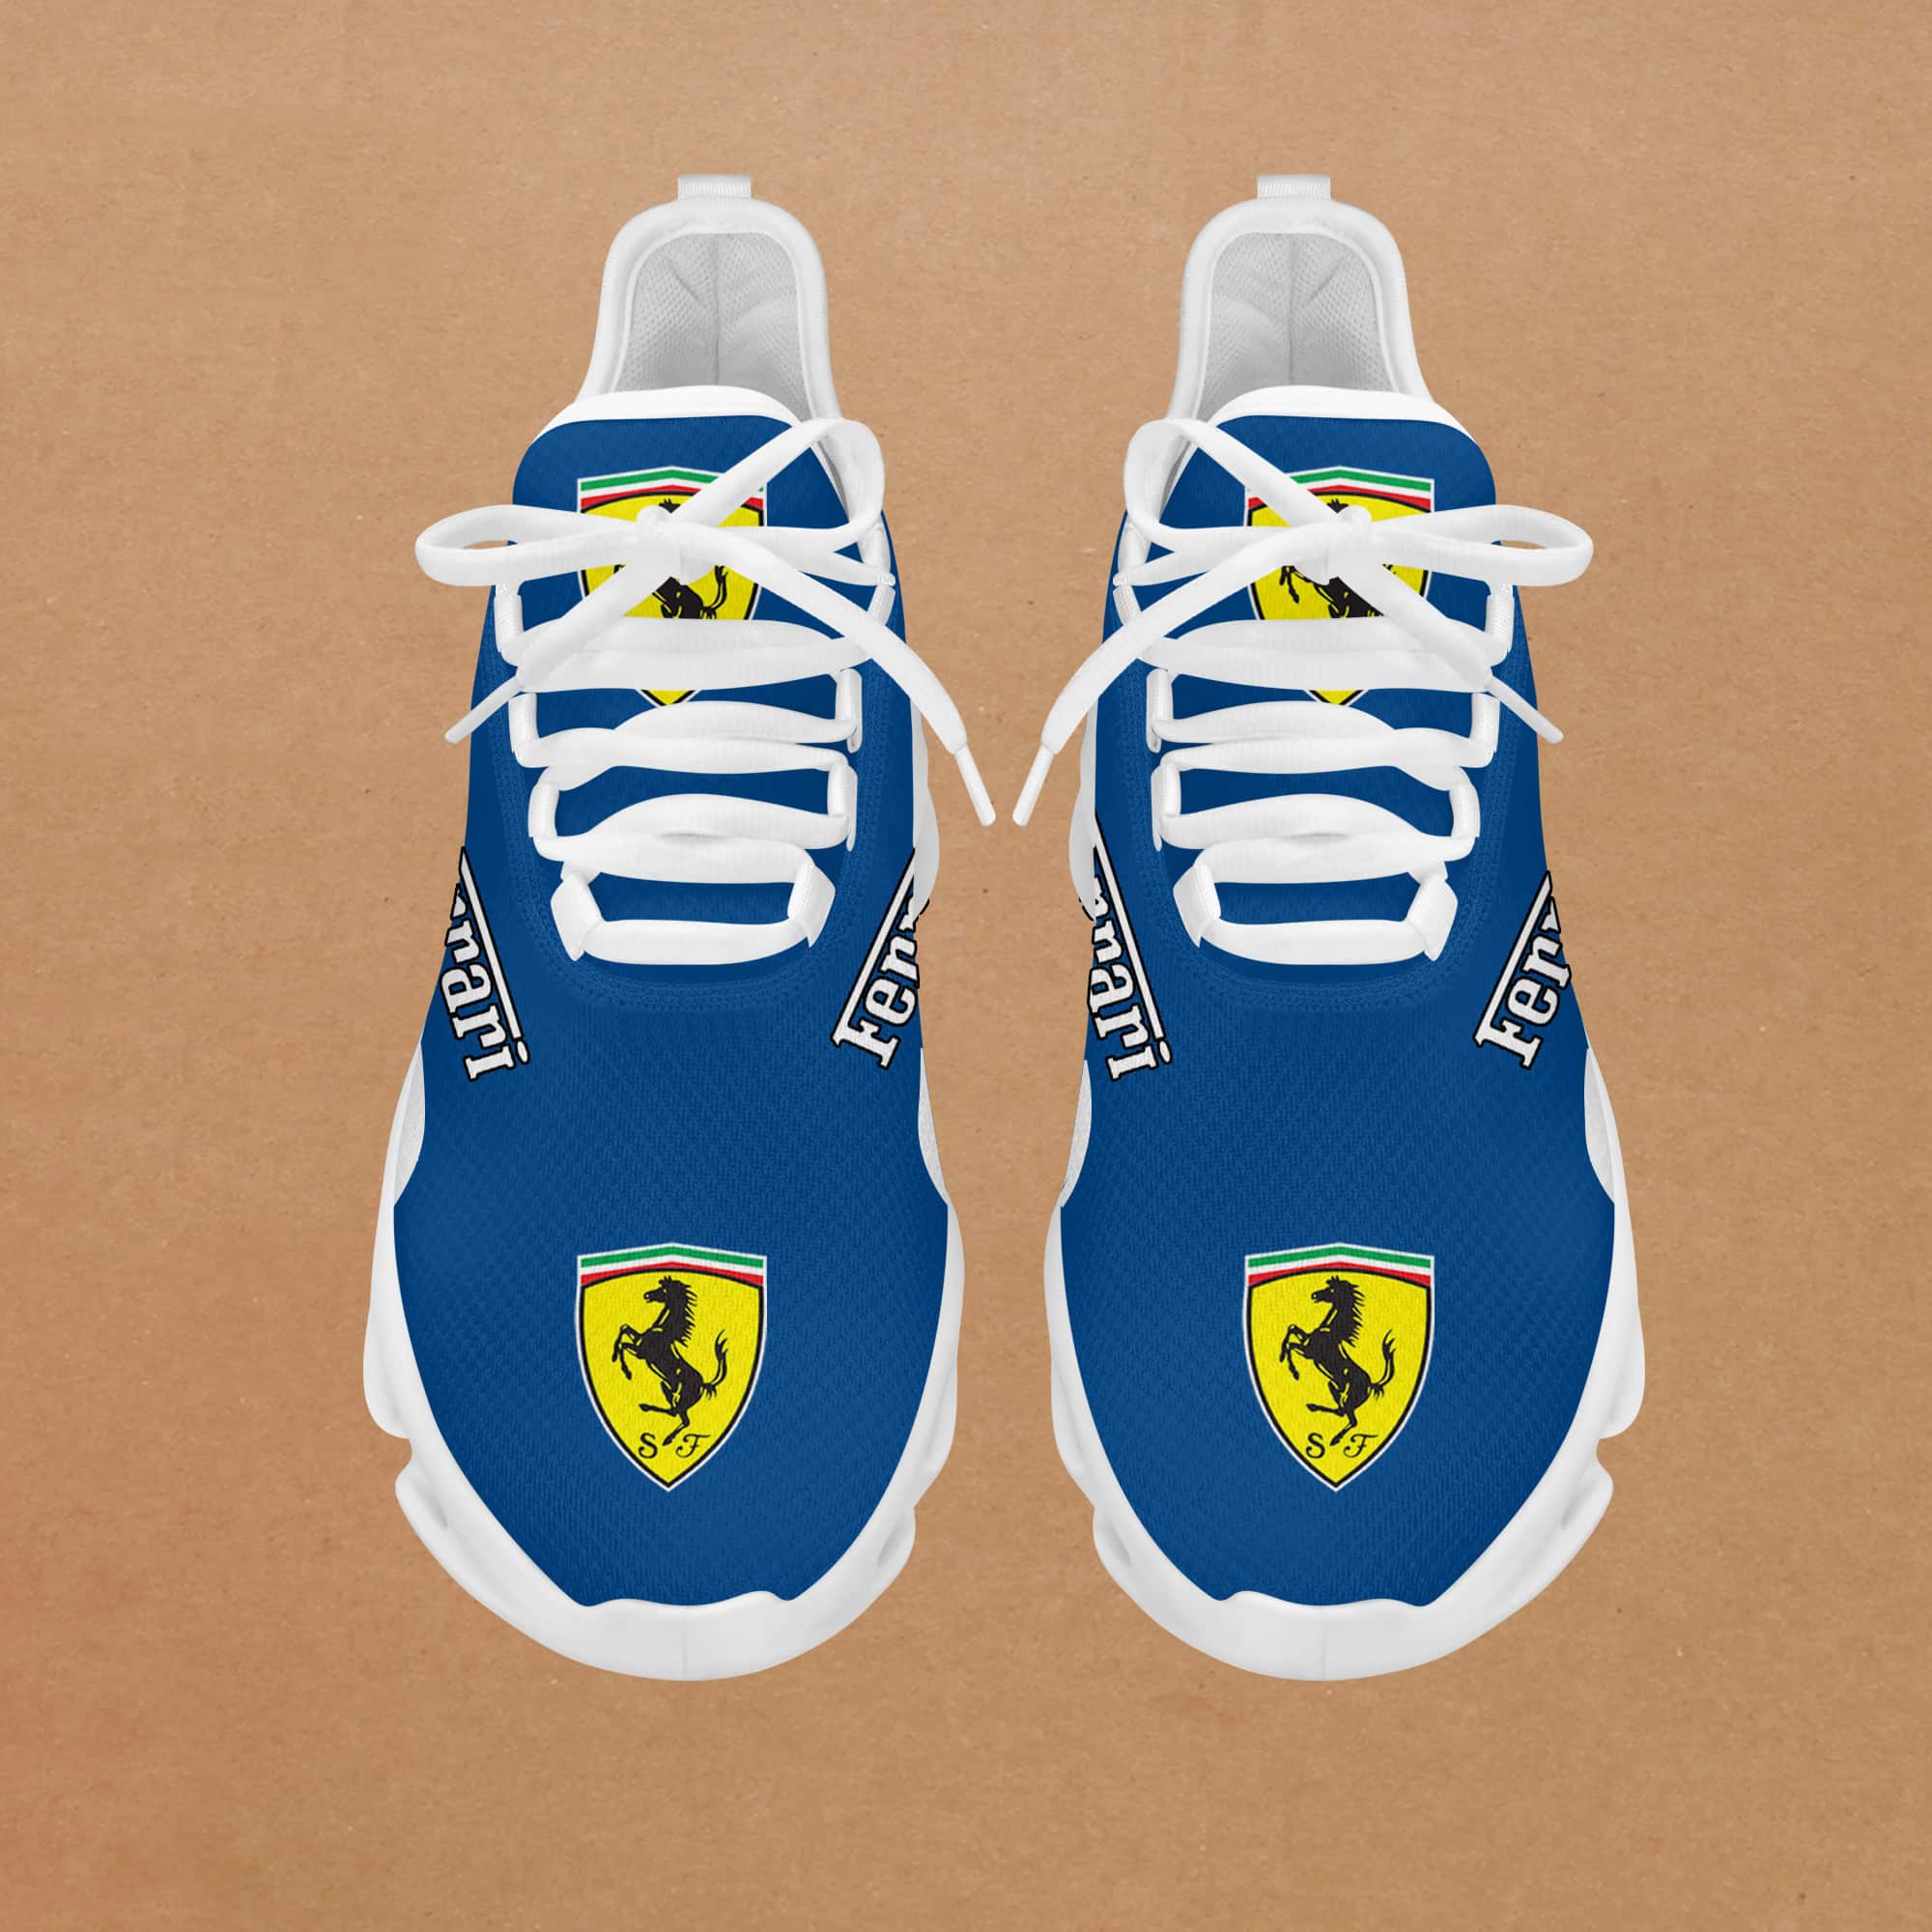 Ferrari Sneaker Running Shoes Max Soul Shoes Sneakers Ver 4 3